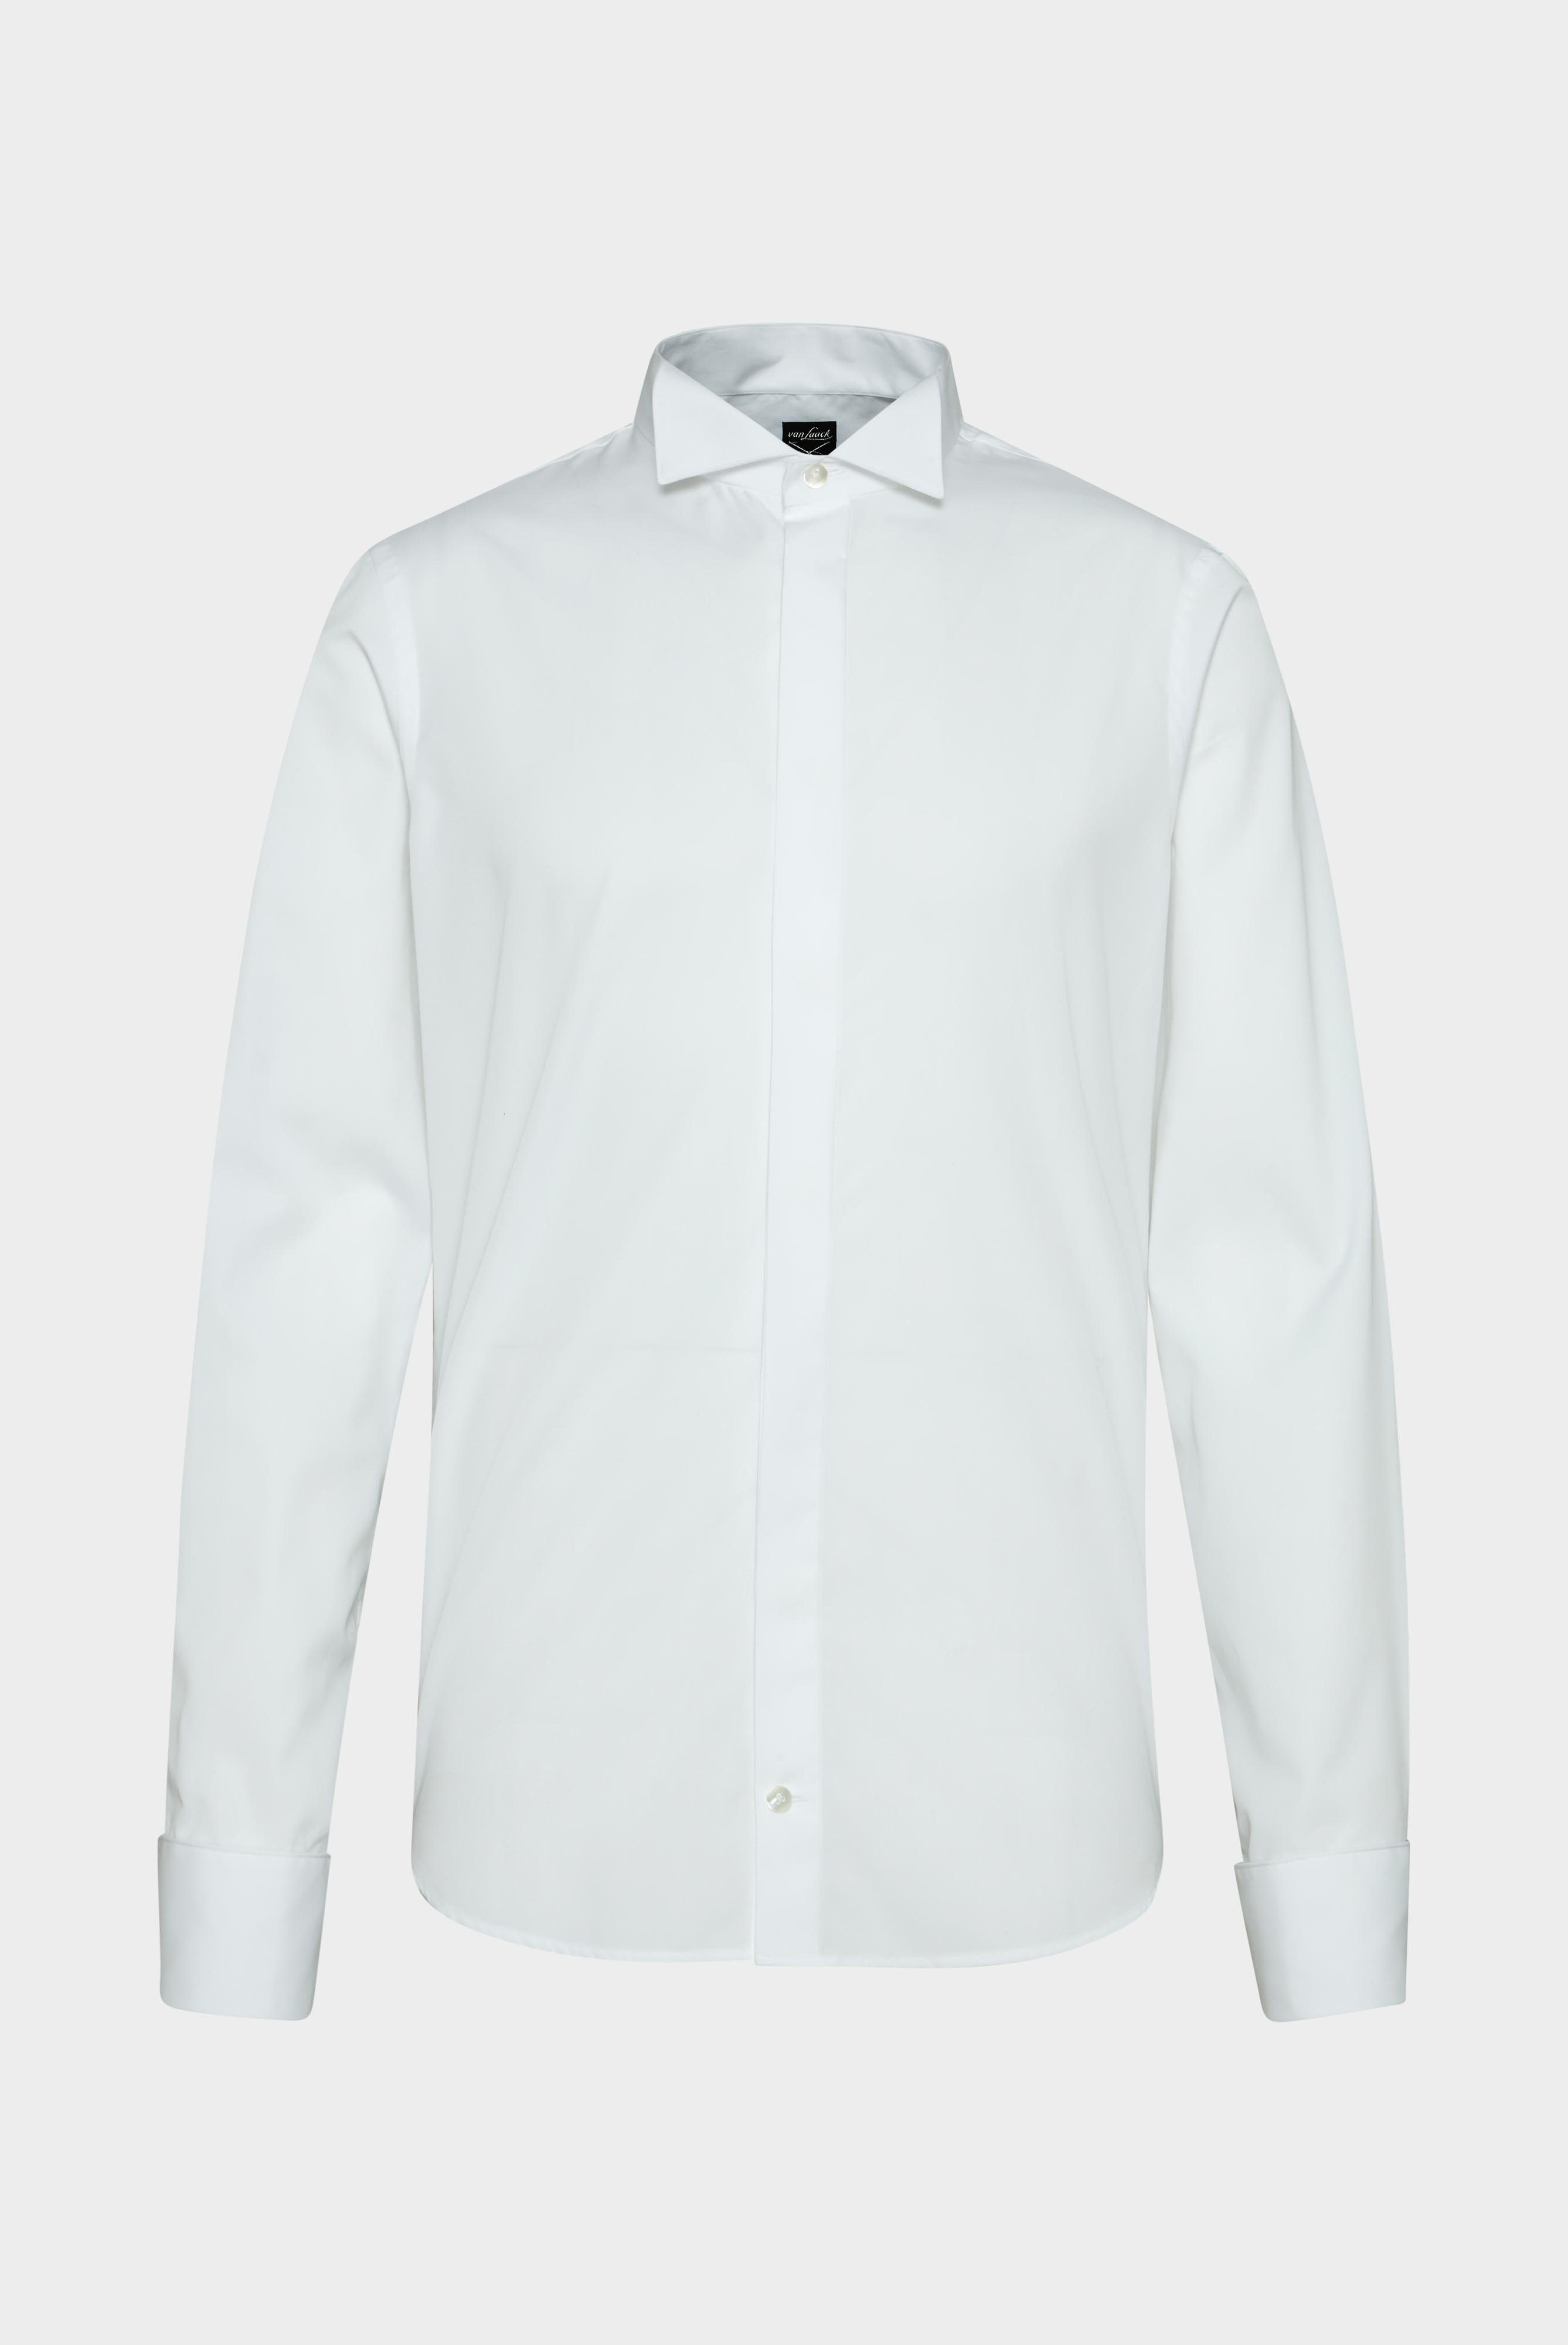 Festliche Hemden+Poplin Wing Collar Evening Shirt+20.2061.NV.130648.000.37